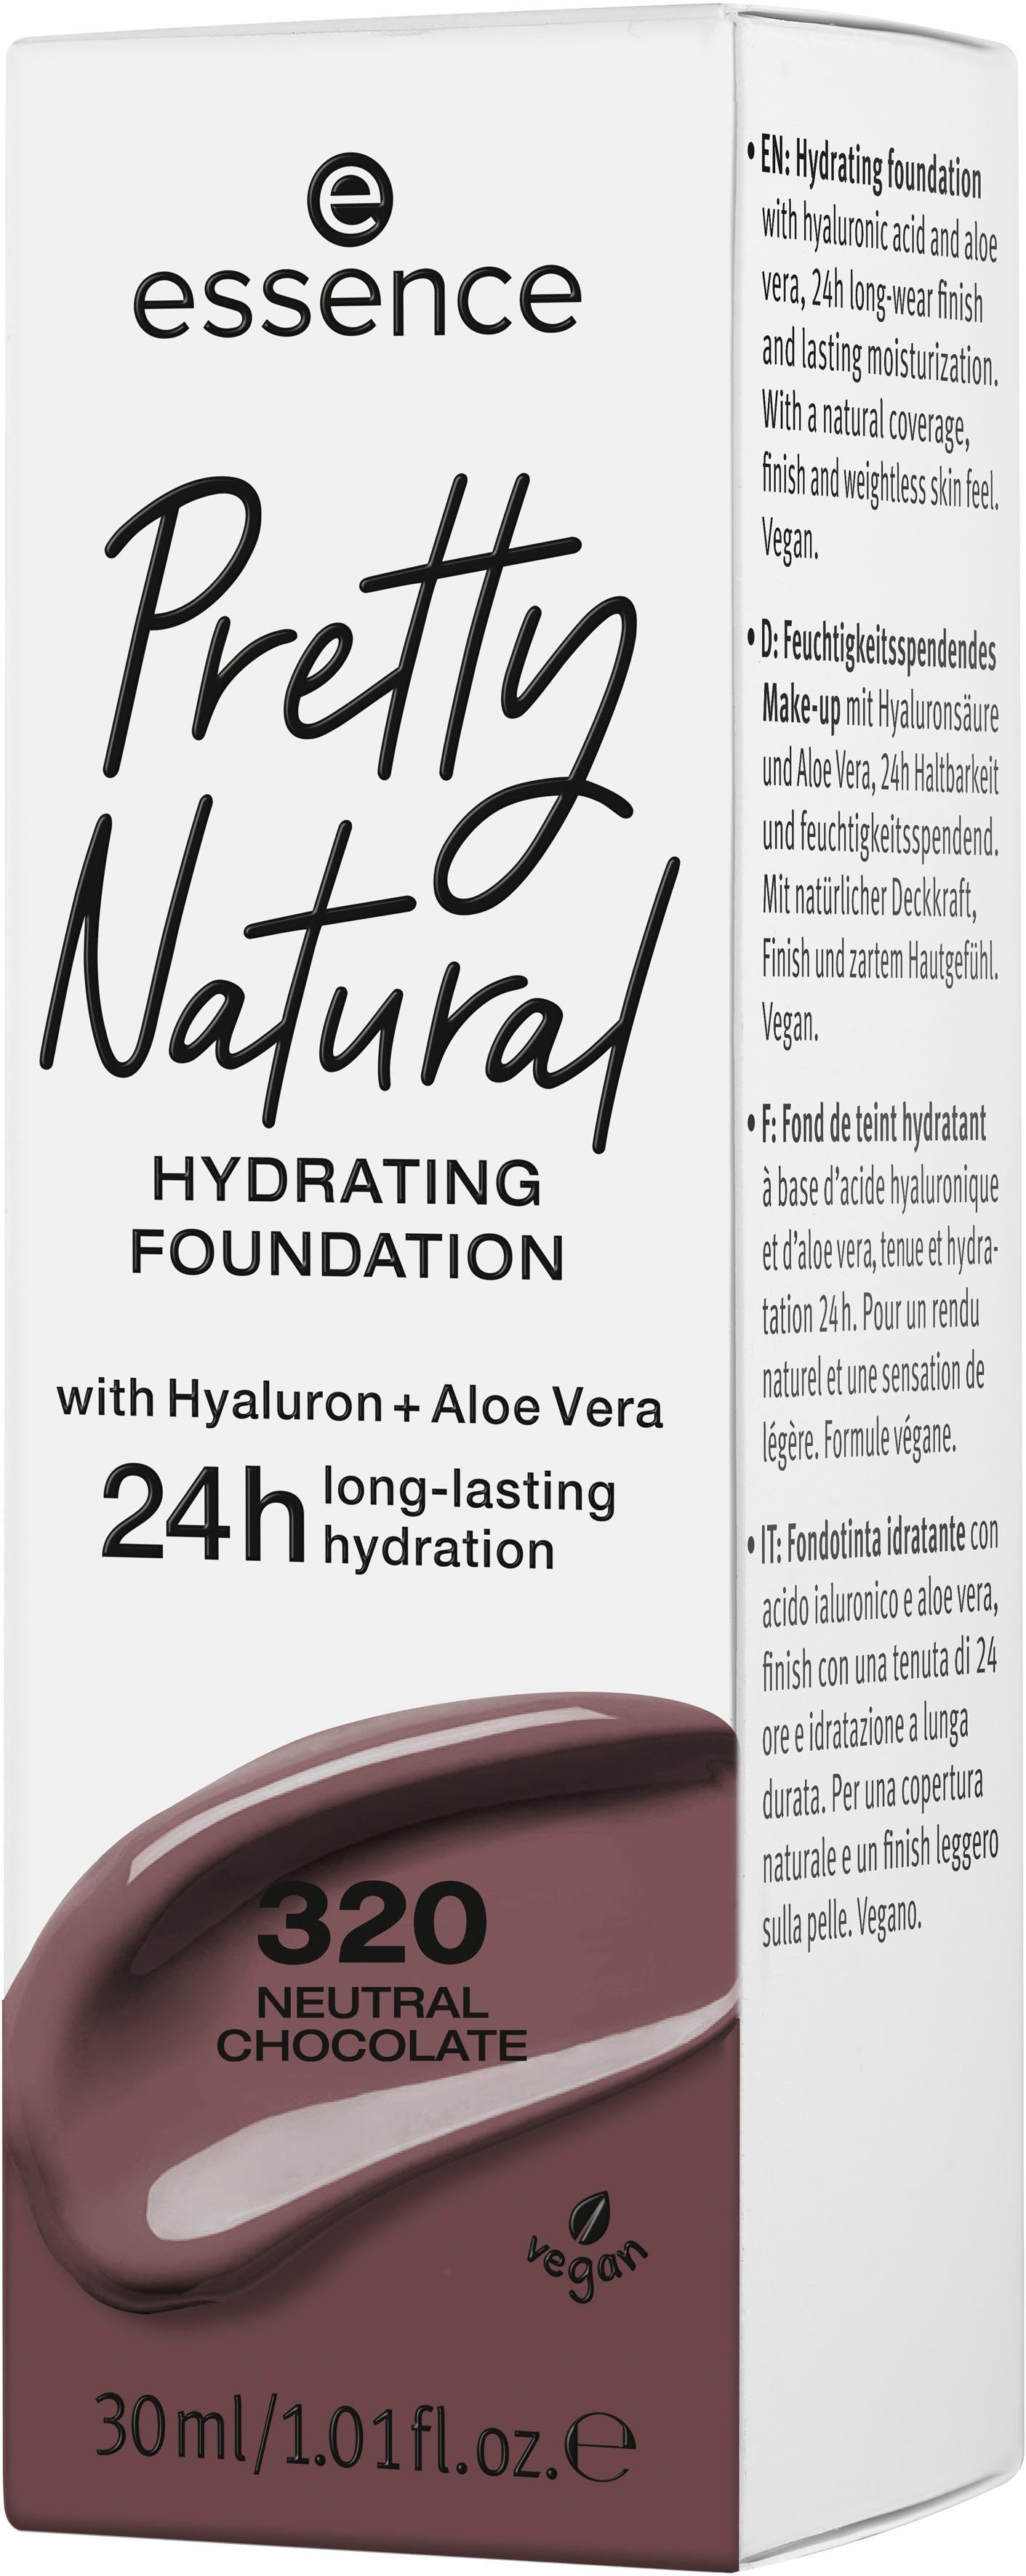 Natural HYDRATING, Foundation Neutral Pretty 3-tlg. Chocolate Essence